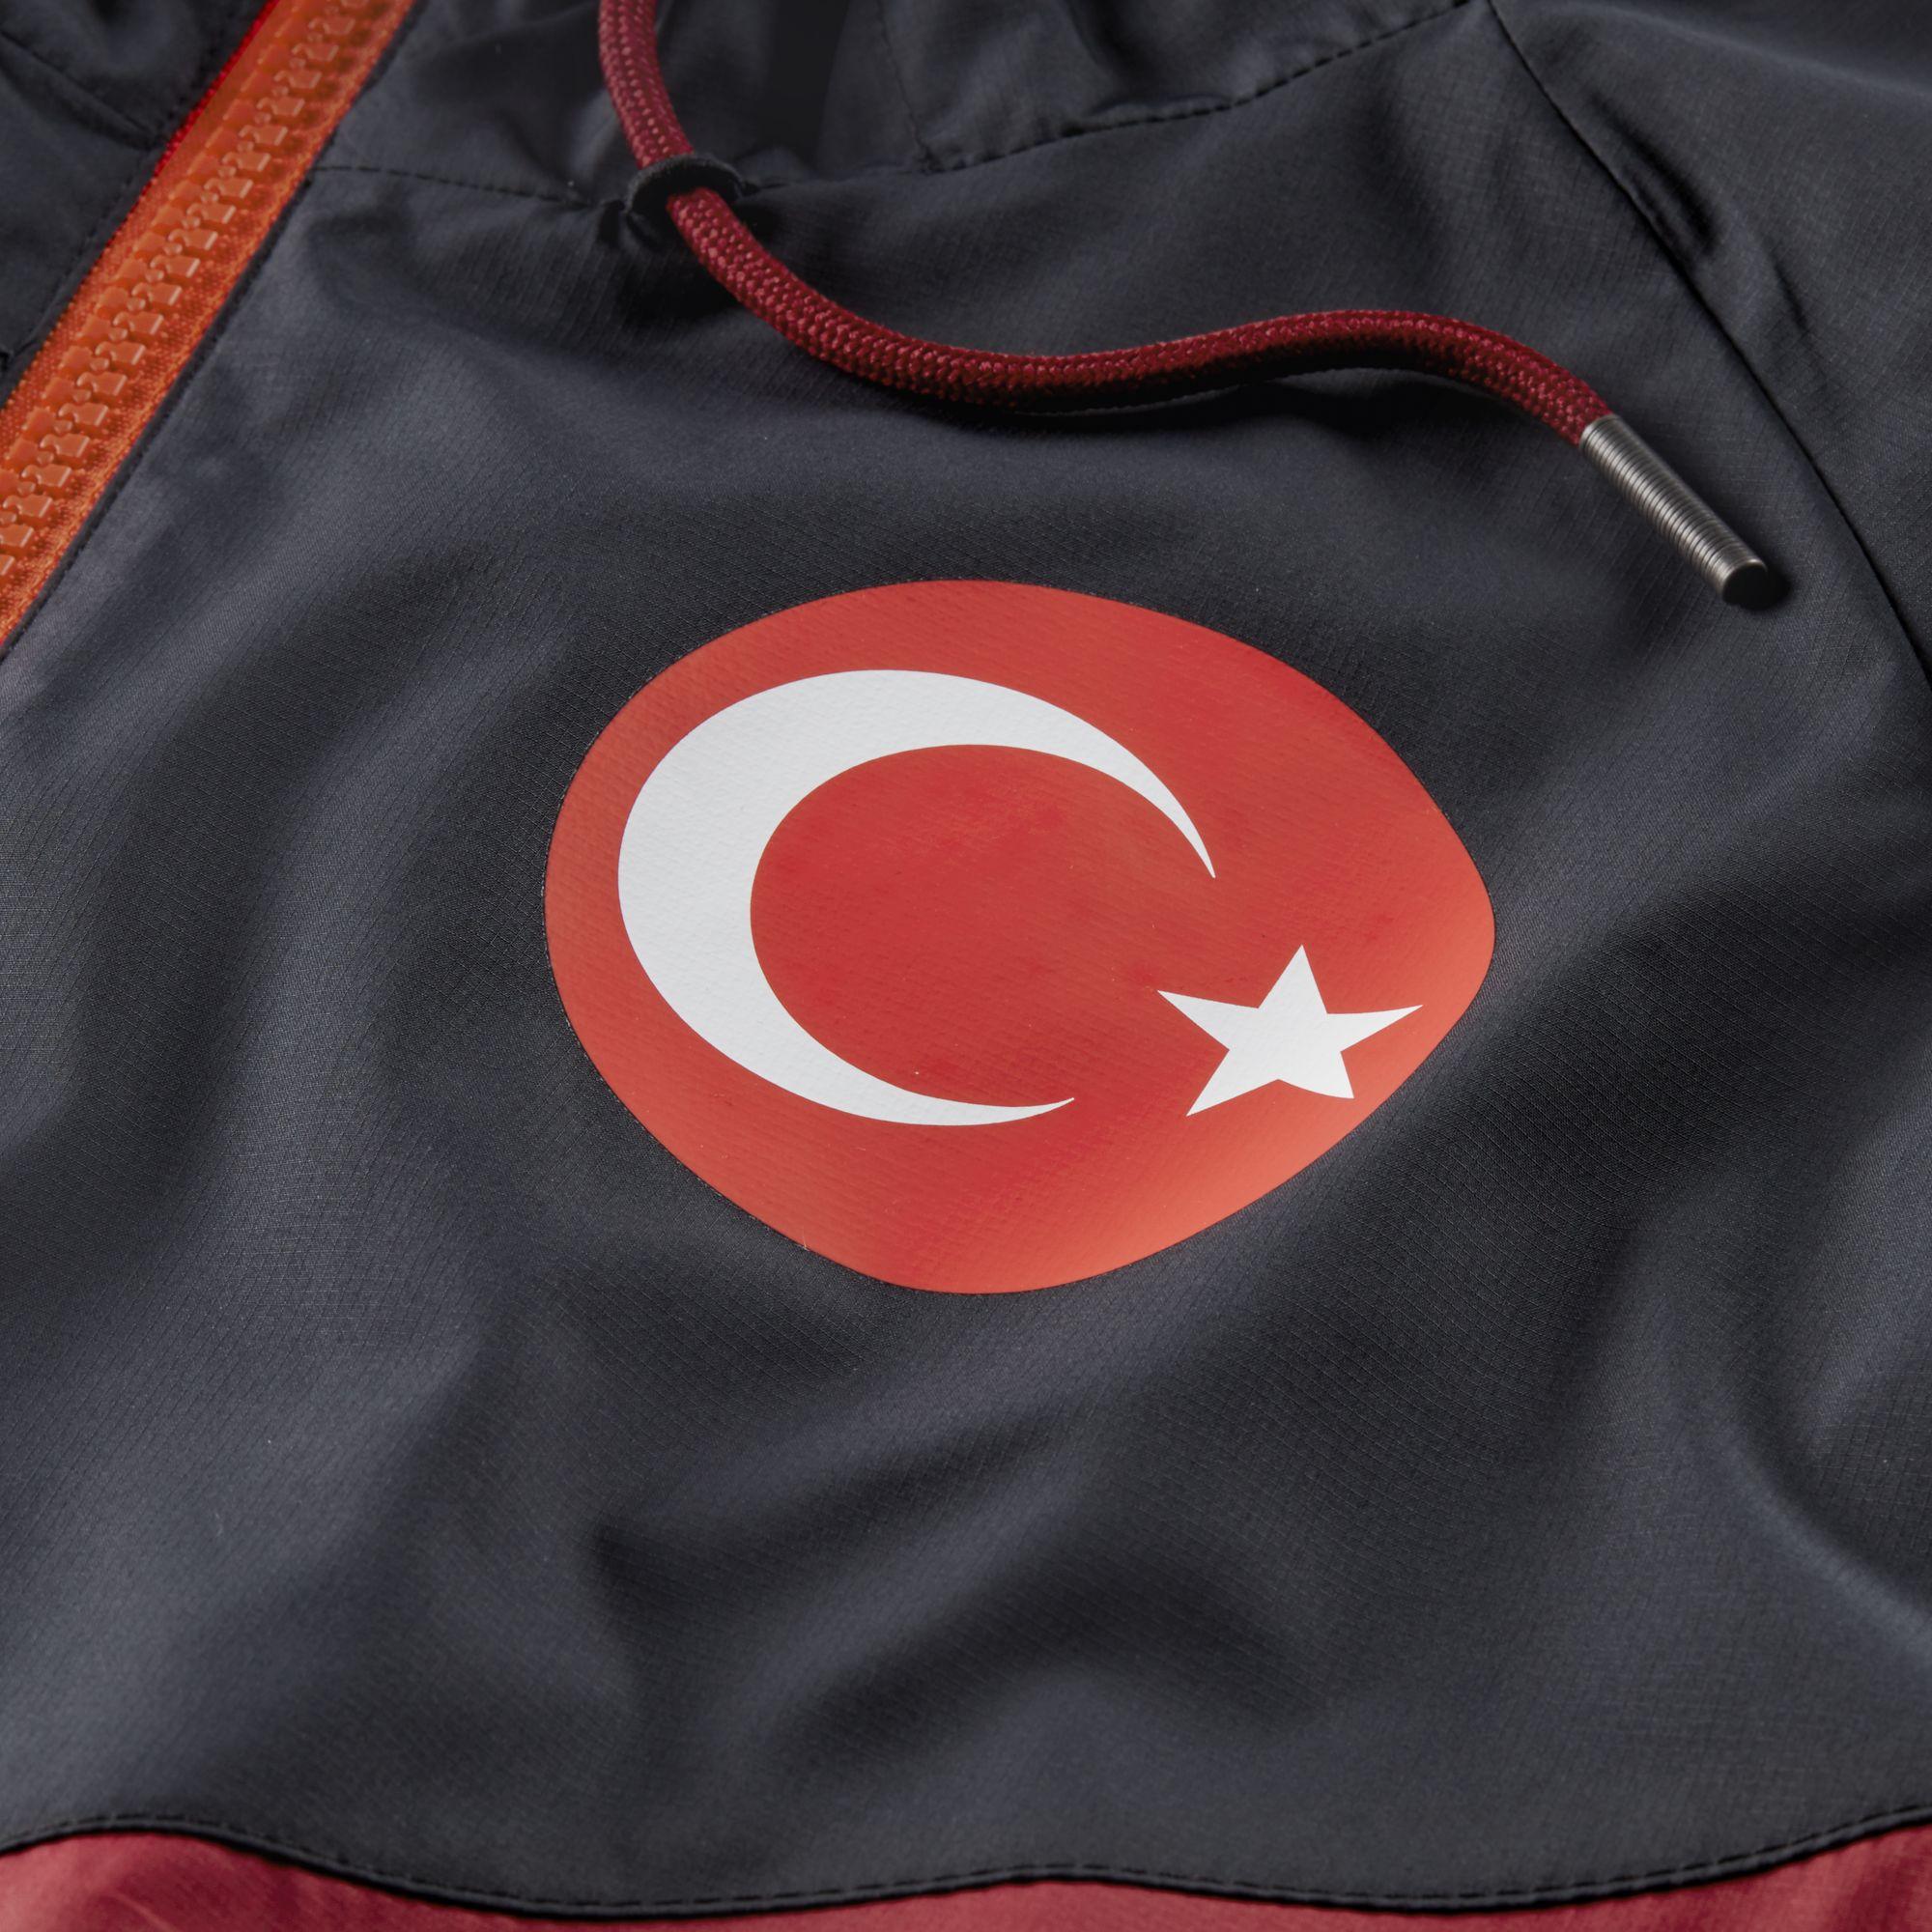 Nike Turkey. Найк Турция. Nike в Турции. Найк из Турции. Найк турция сайт